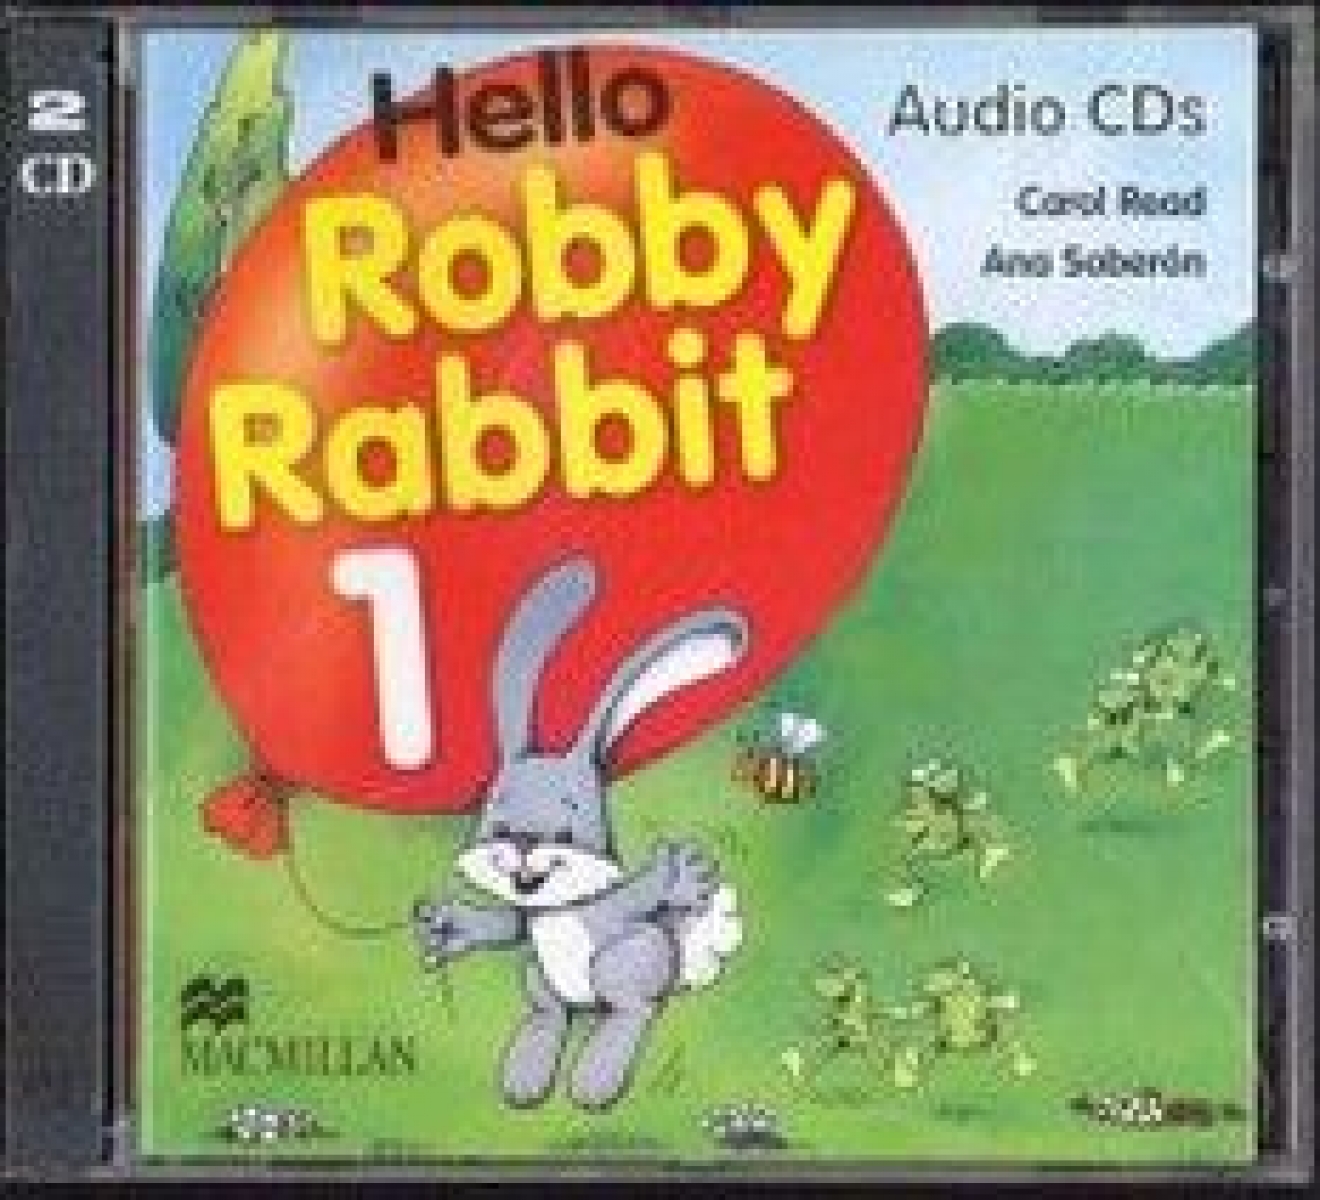 Carol Read, Ana Soberon Hello Robby Rabbit 1 Class Audio CD's (2) 